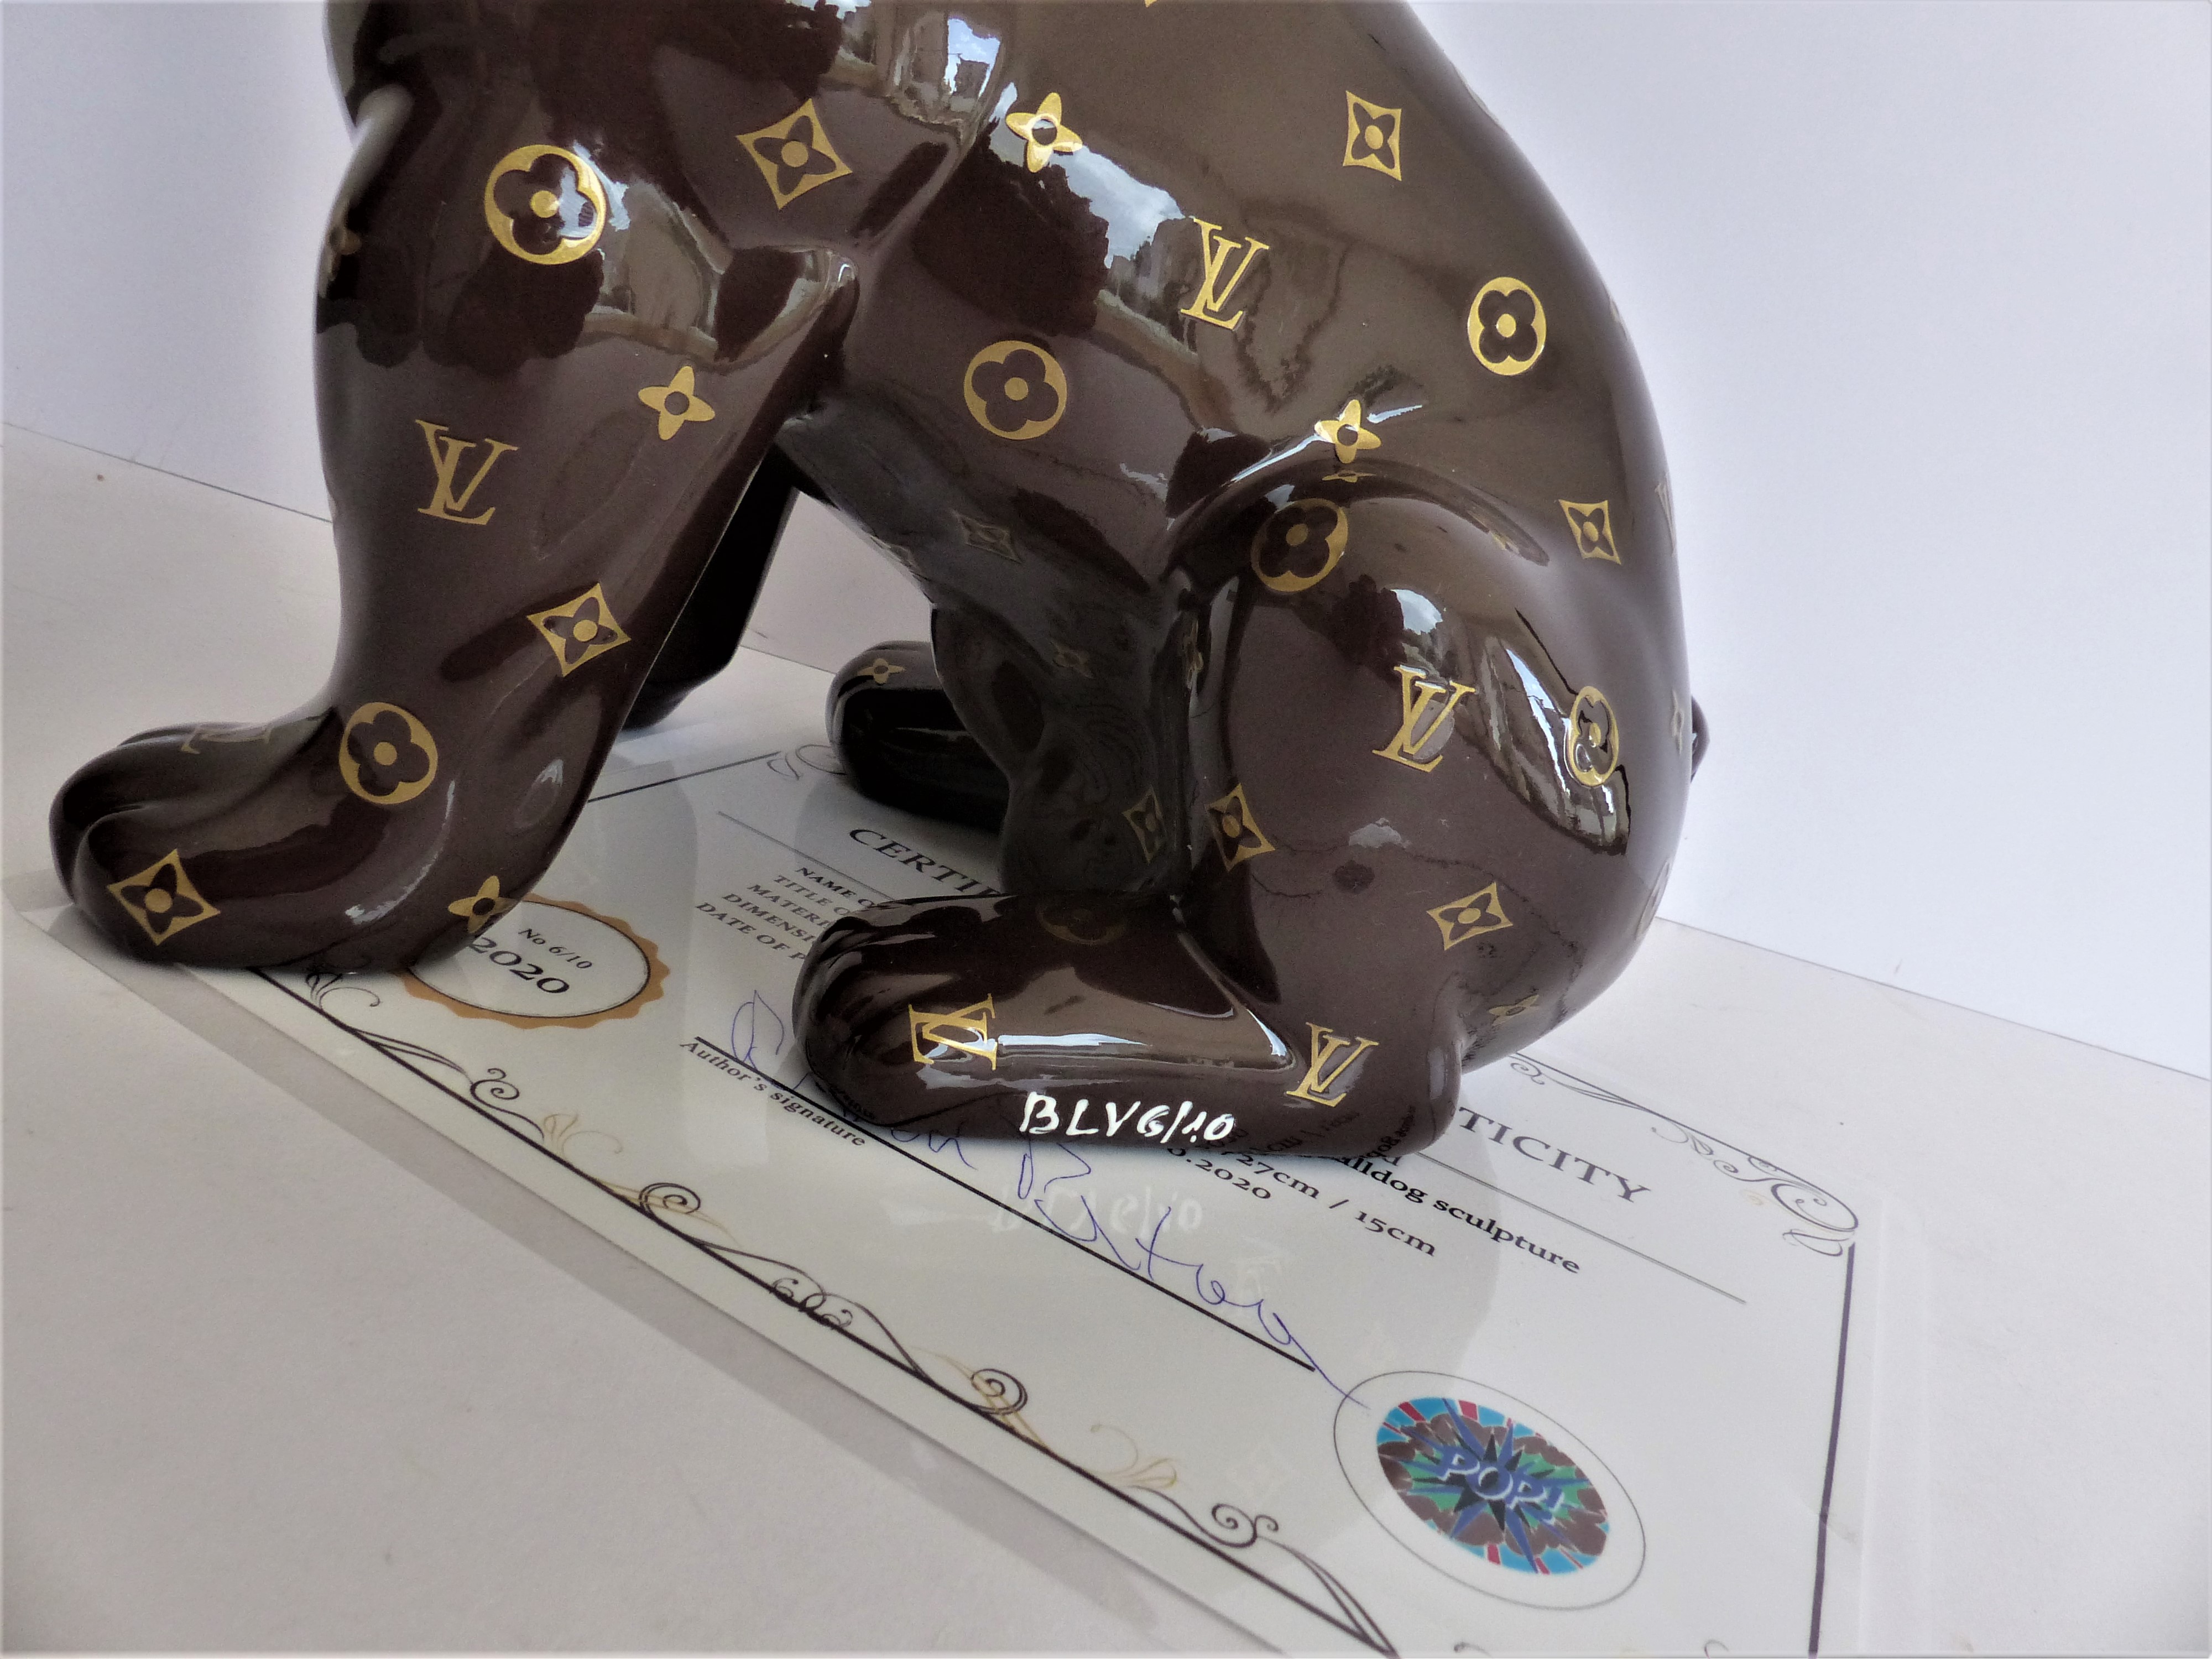 Patrick KONRAD - Louis Vuitton Bulldog - Sculpture - Revelations